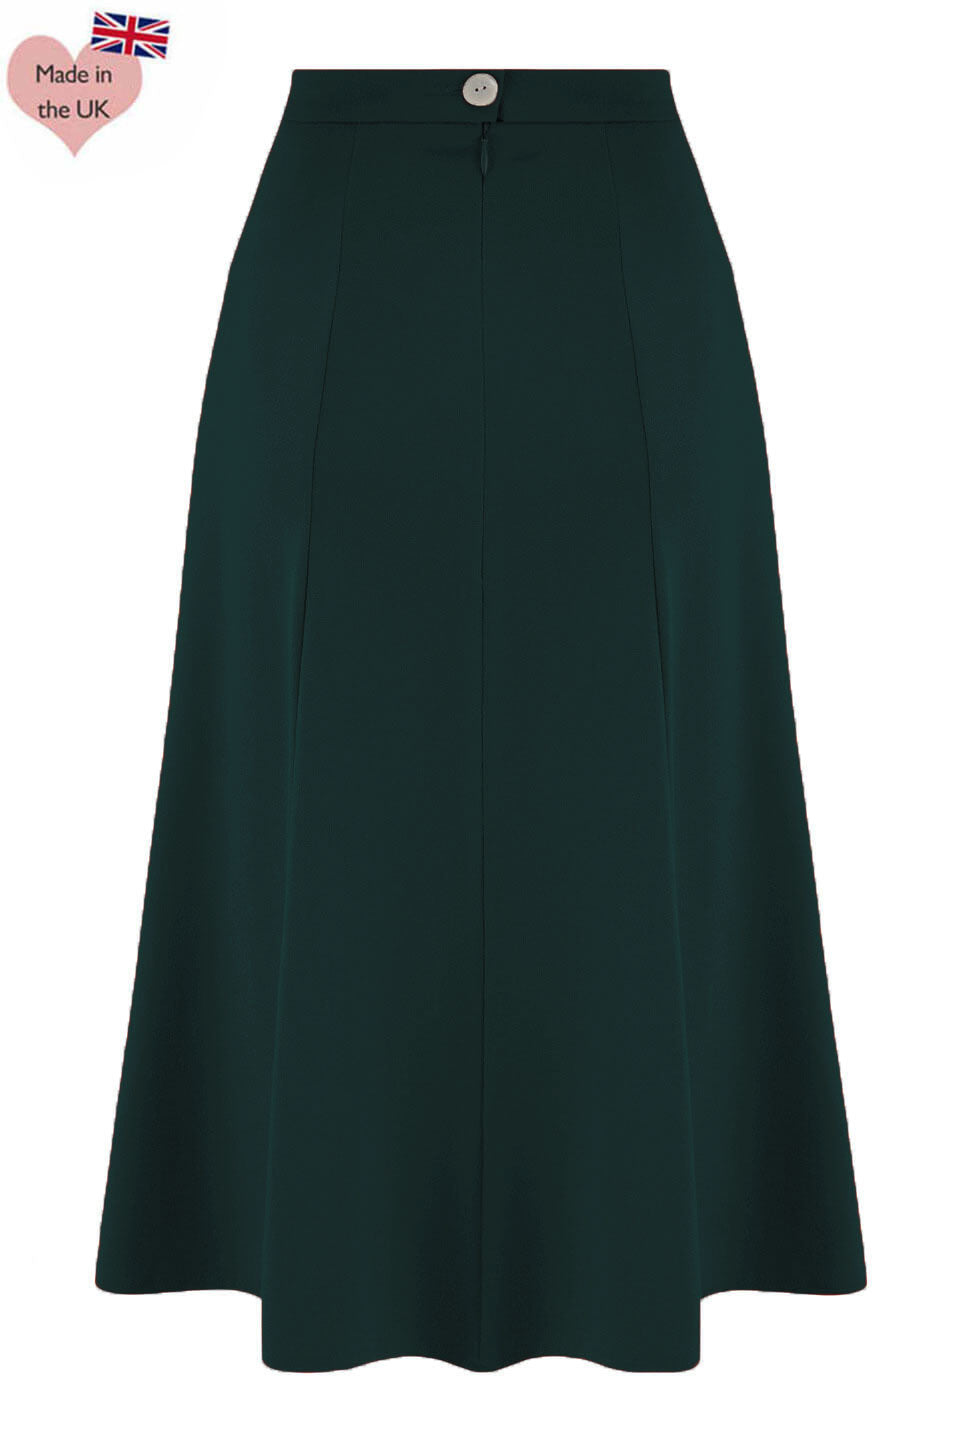 Bottle Green Vintage Inspired Below Knee Length Crepe Skirt  | 1930s and 40s Style | Weekend Doll  